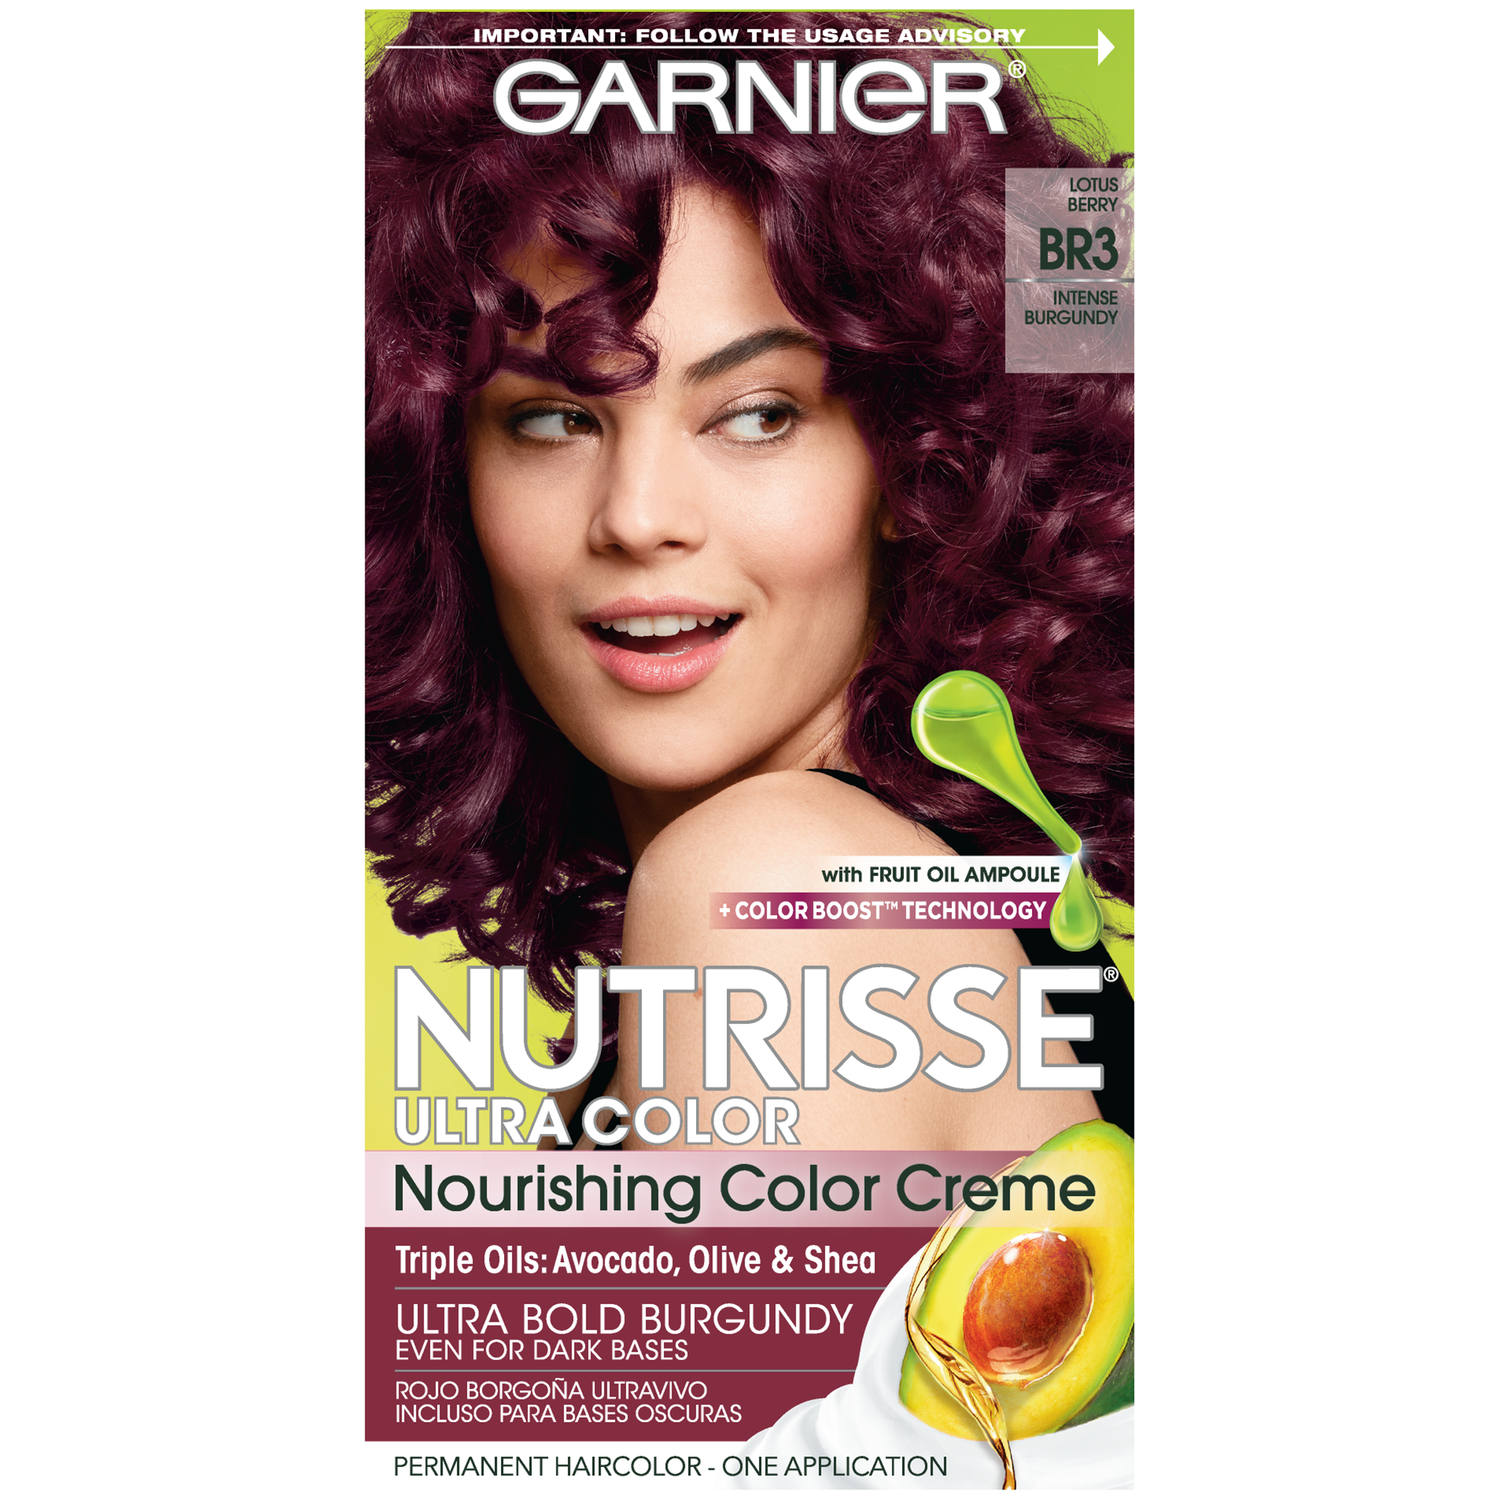 Garnier BR3 Intense Burgundy Ultra Color Nourishing Color Creme 1 KT BOX -  Beauty - Hair Care - Hair Coloring